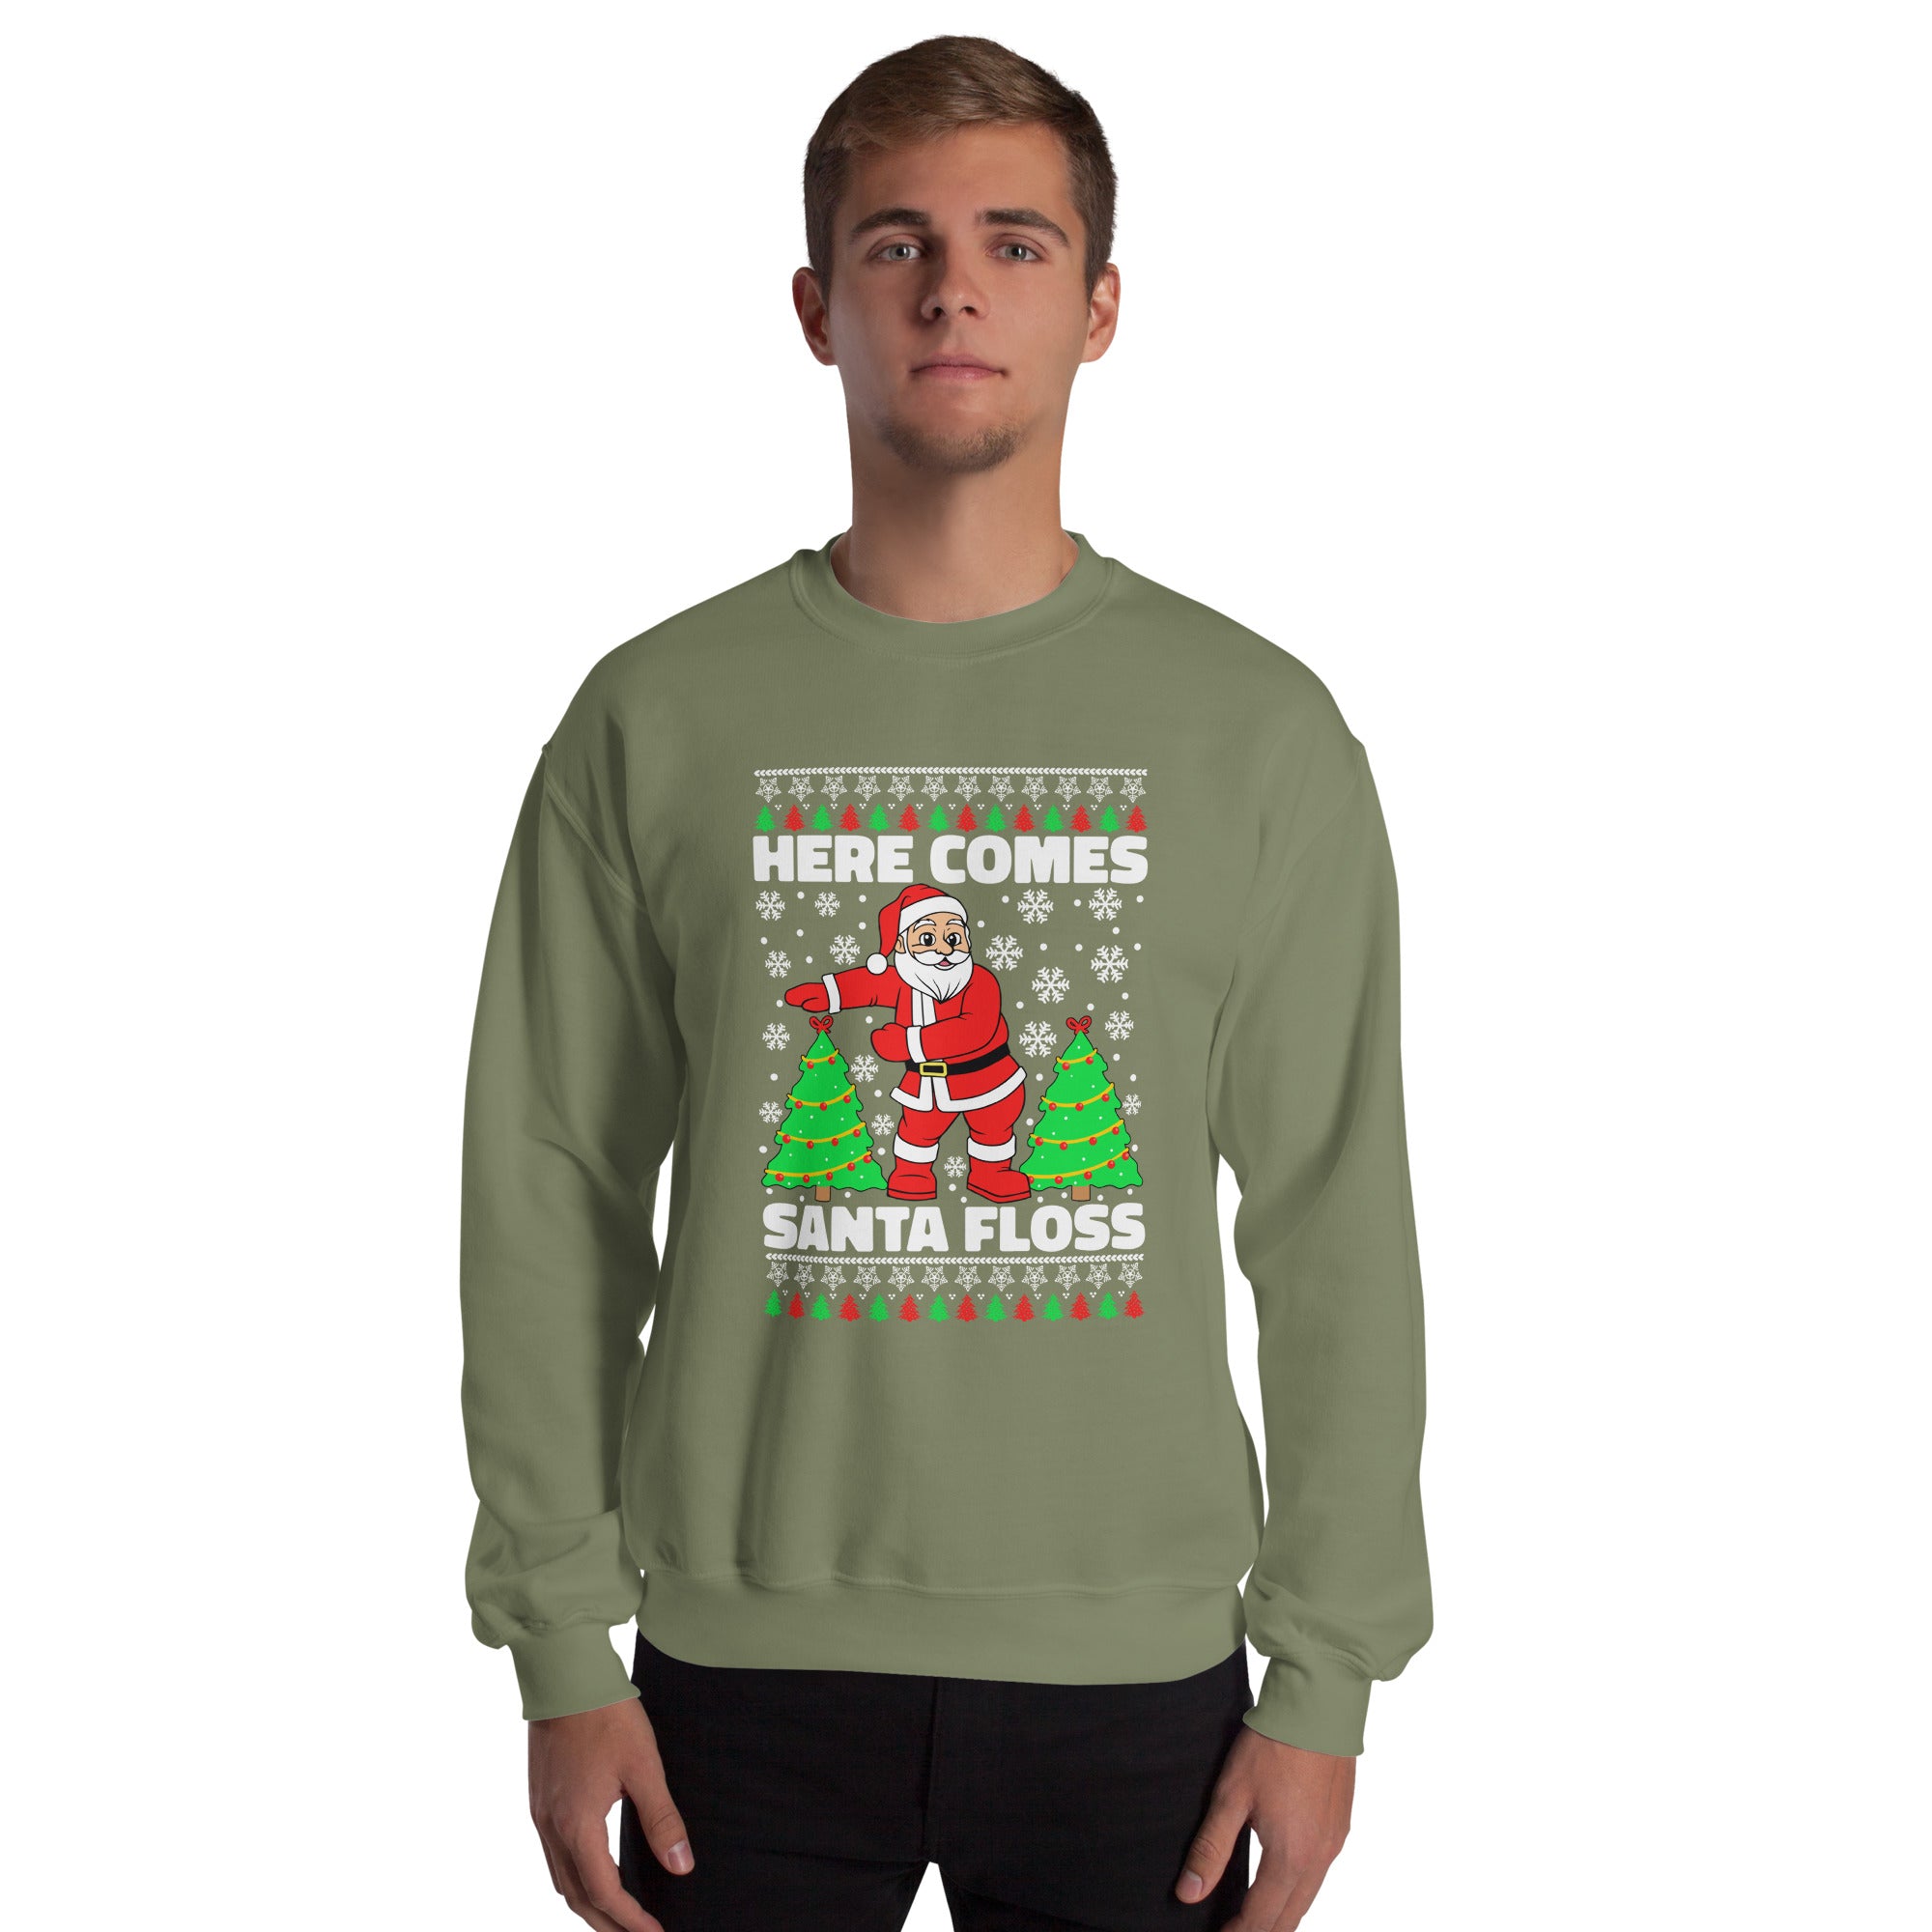 Here Comes Santa Floss Men's Sweatshirt Merry Christmas Floss Dance Flossing Santa Claus Xmas Holiday Festive Men's Jumper